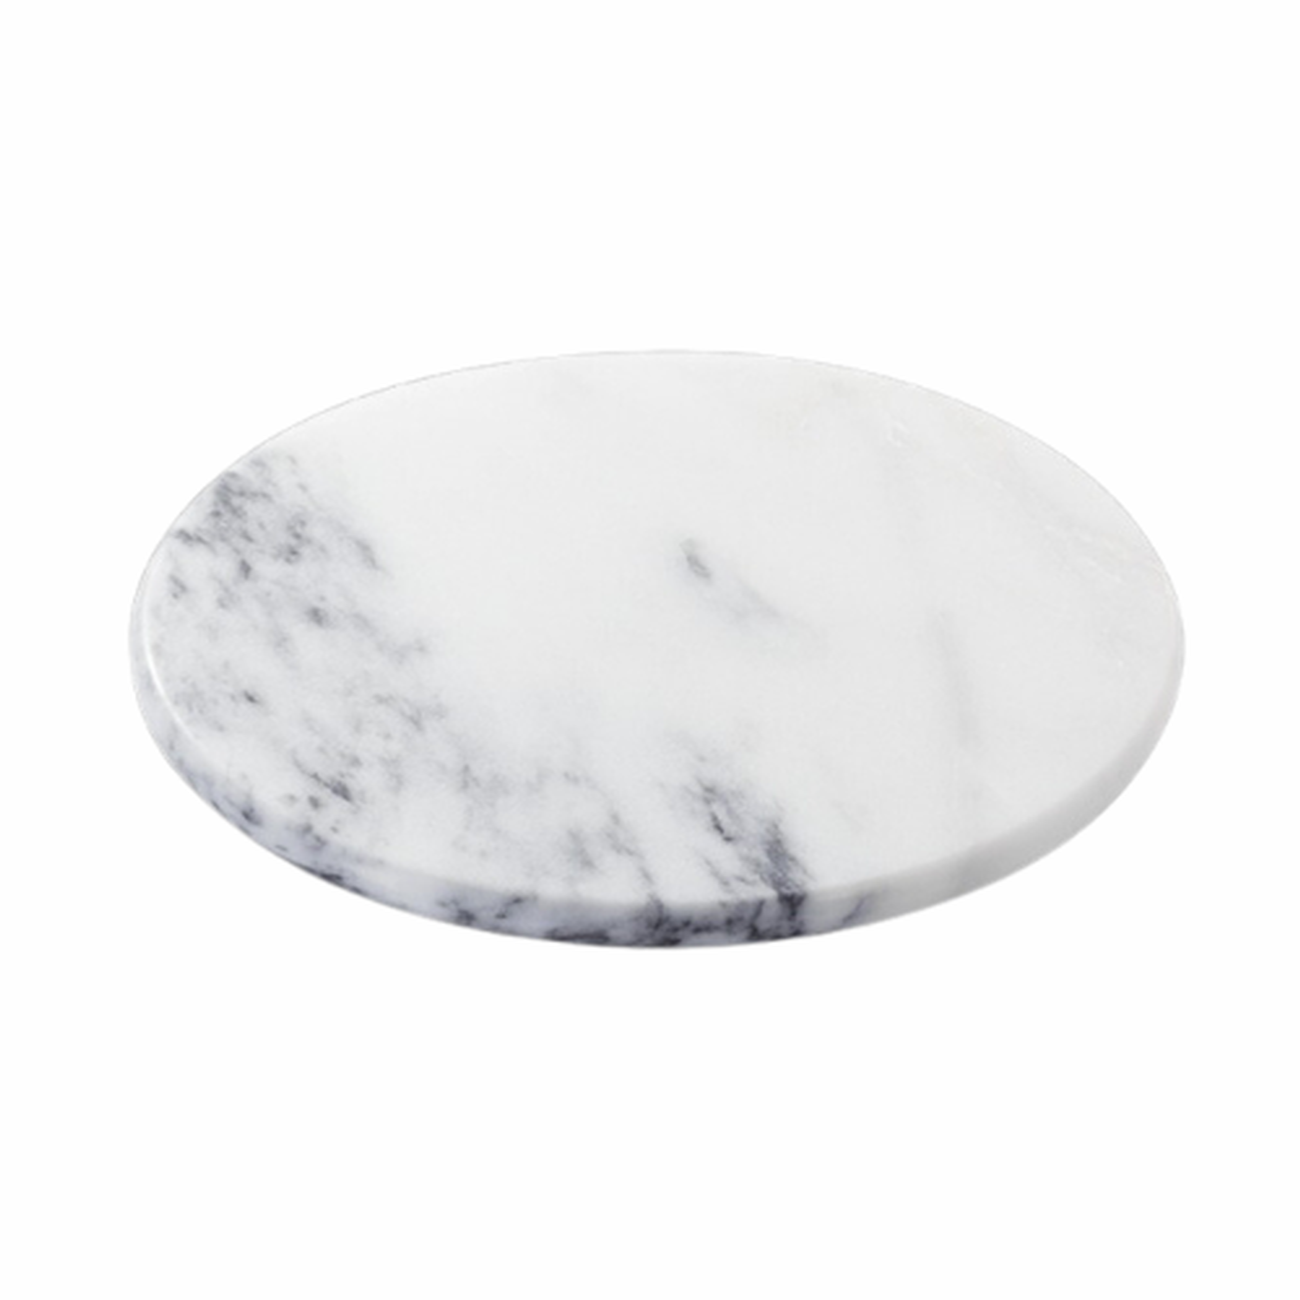 judge-marble-26cm-10-round-platter-white - Judge White Marble Round Platter 26cm